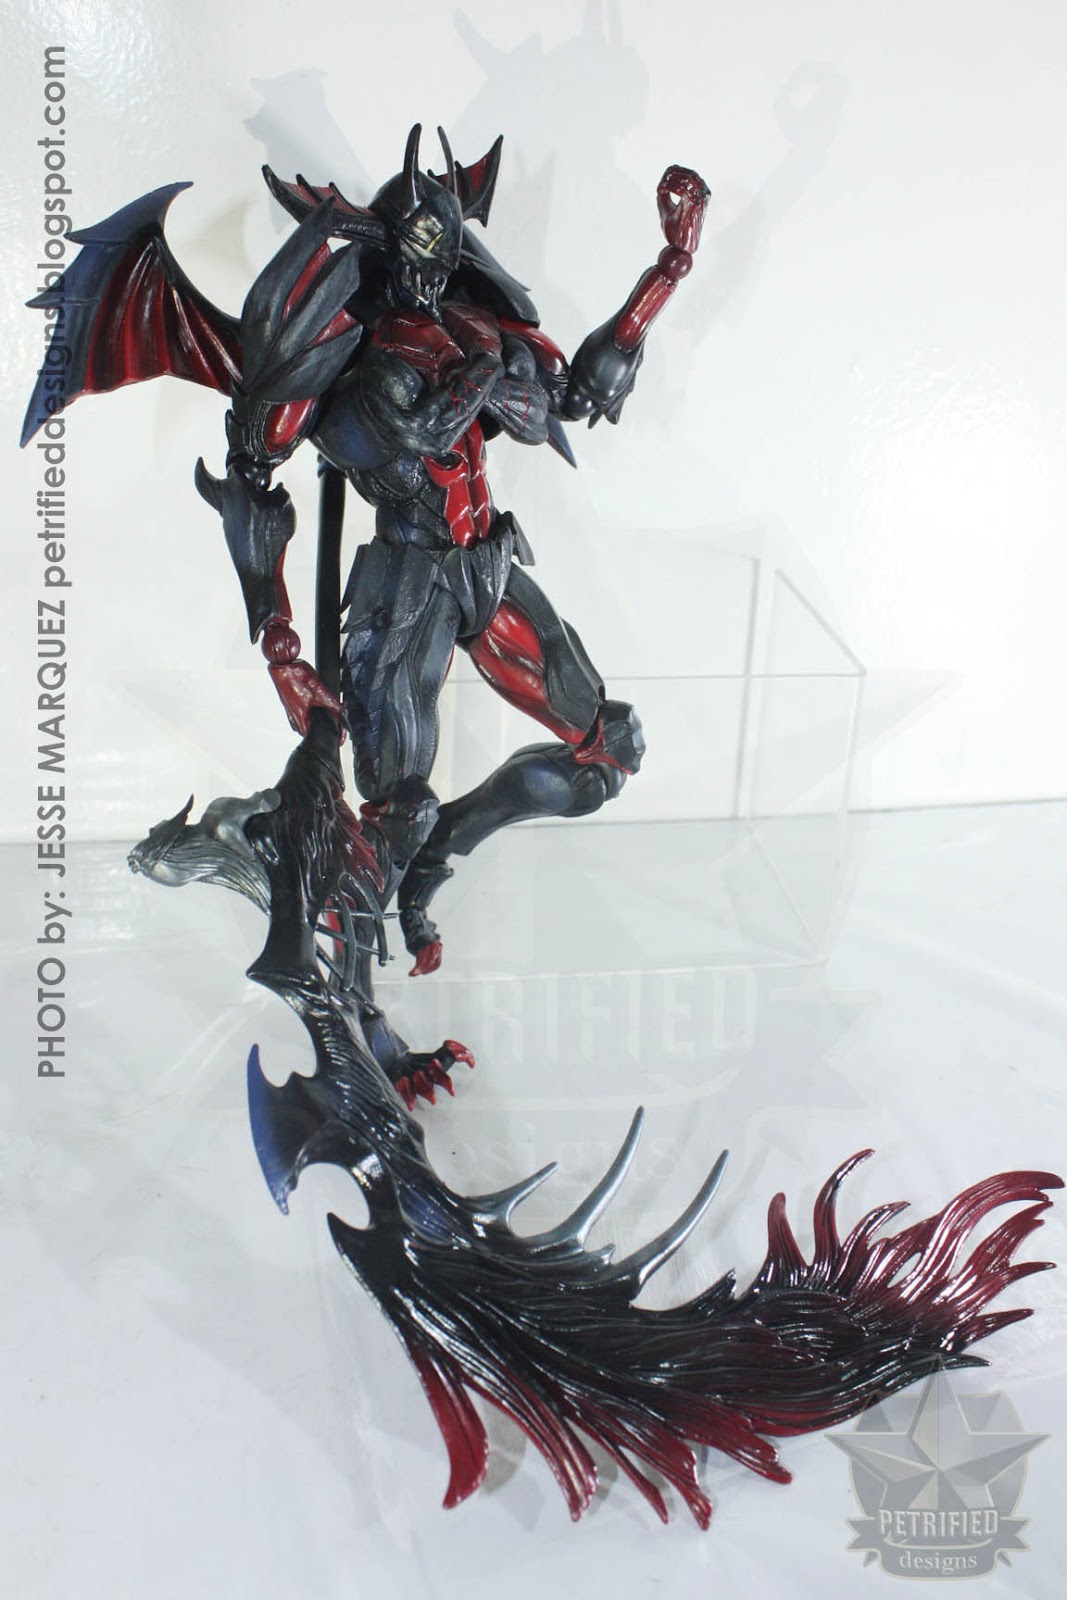 Square Enix Play Arts Kai Monster Hunter Diablos Armor Rage Set